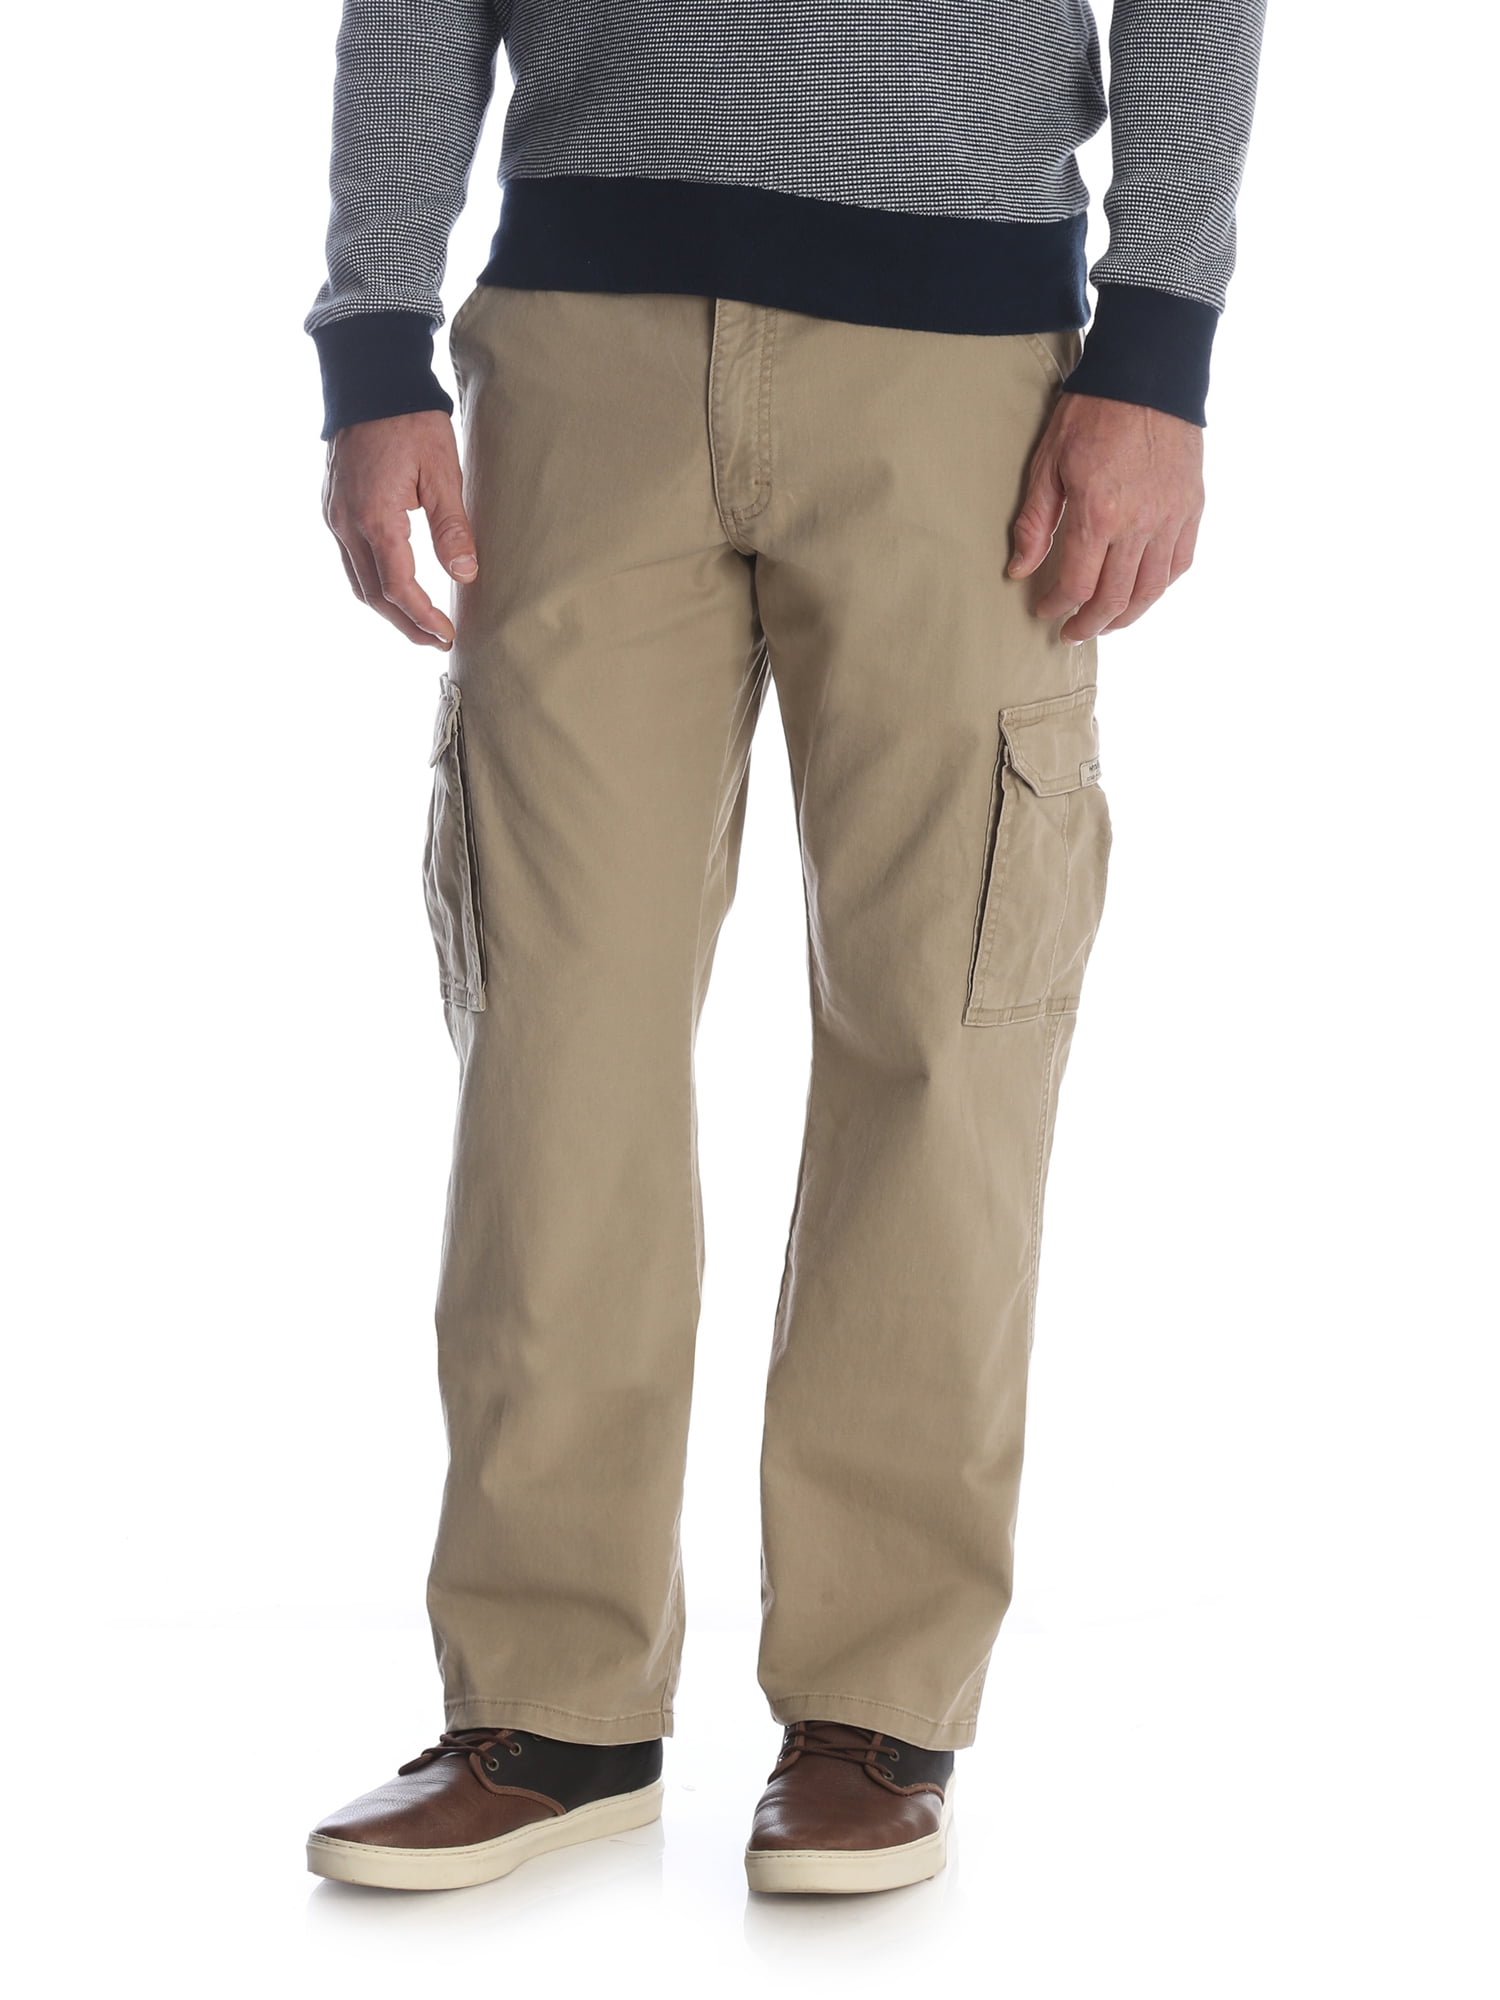 Wrangler Authentics Mens Premium Relaxed Fit Straight Leg Cargo Pant Wrangler Authentics Men's Sportswear ZM6BL